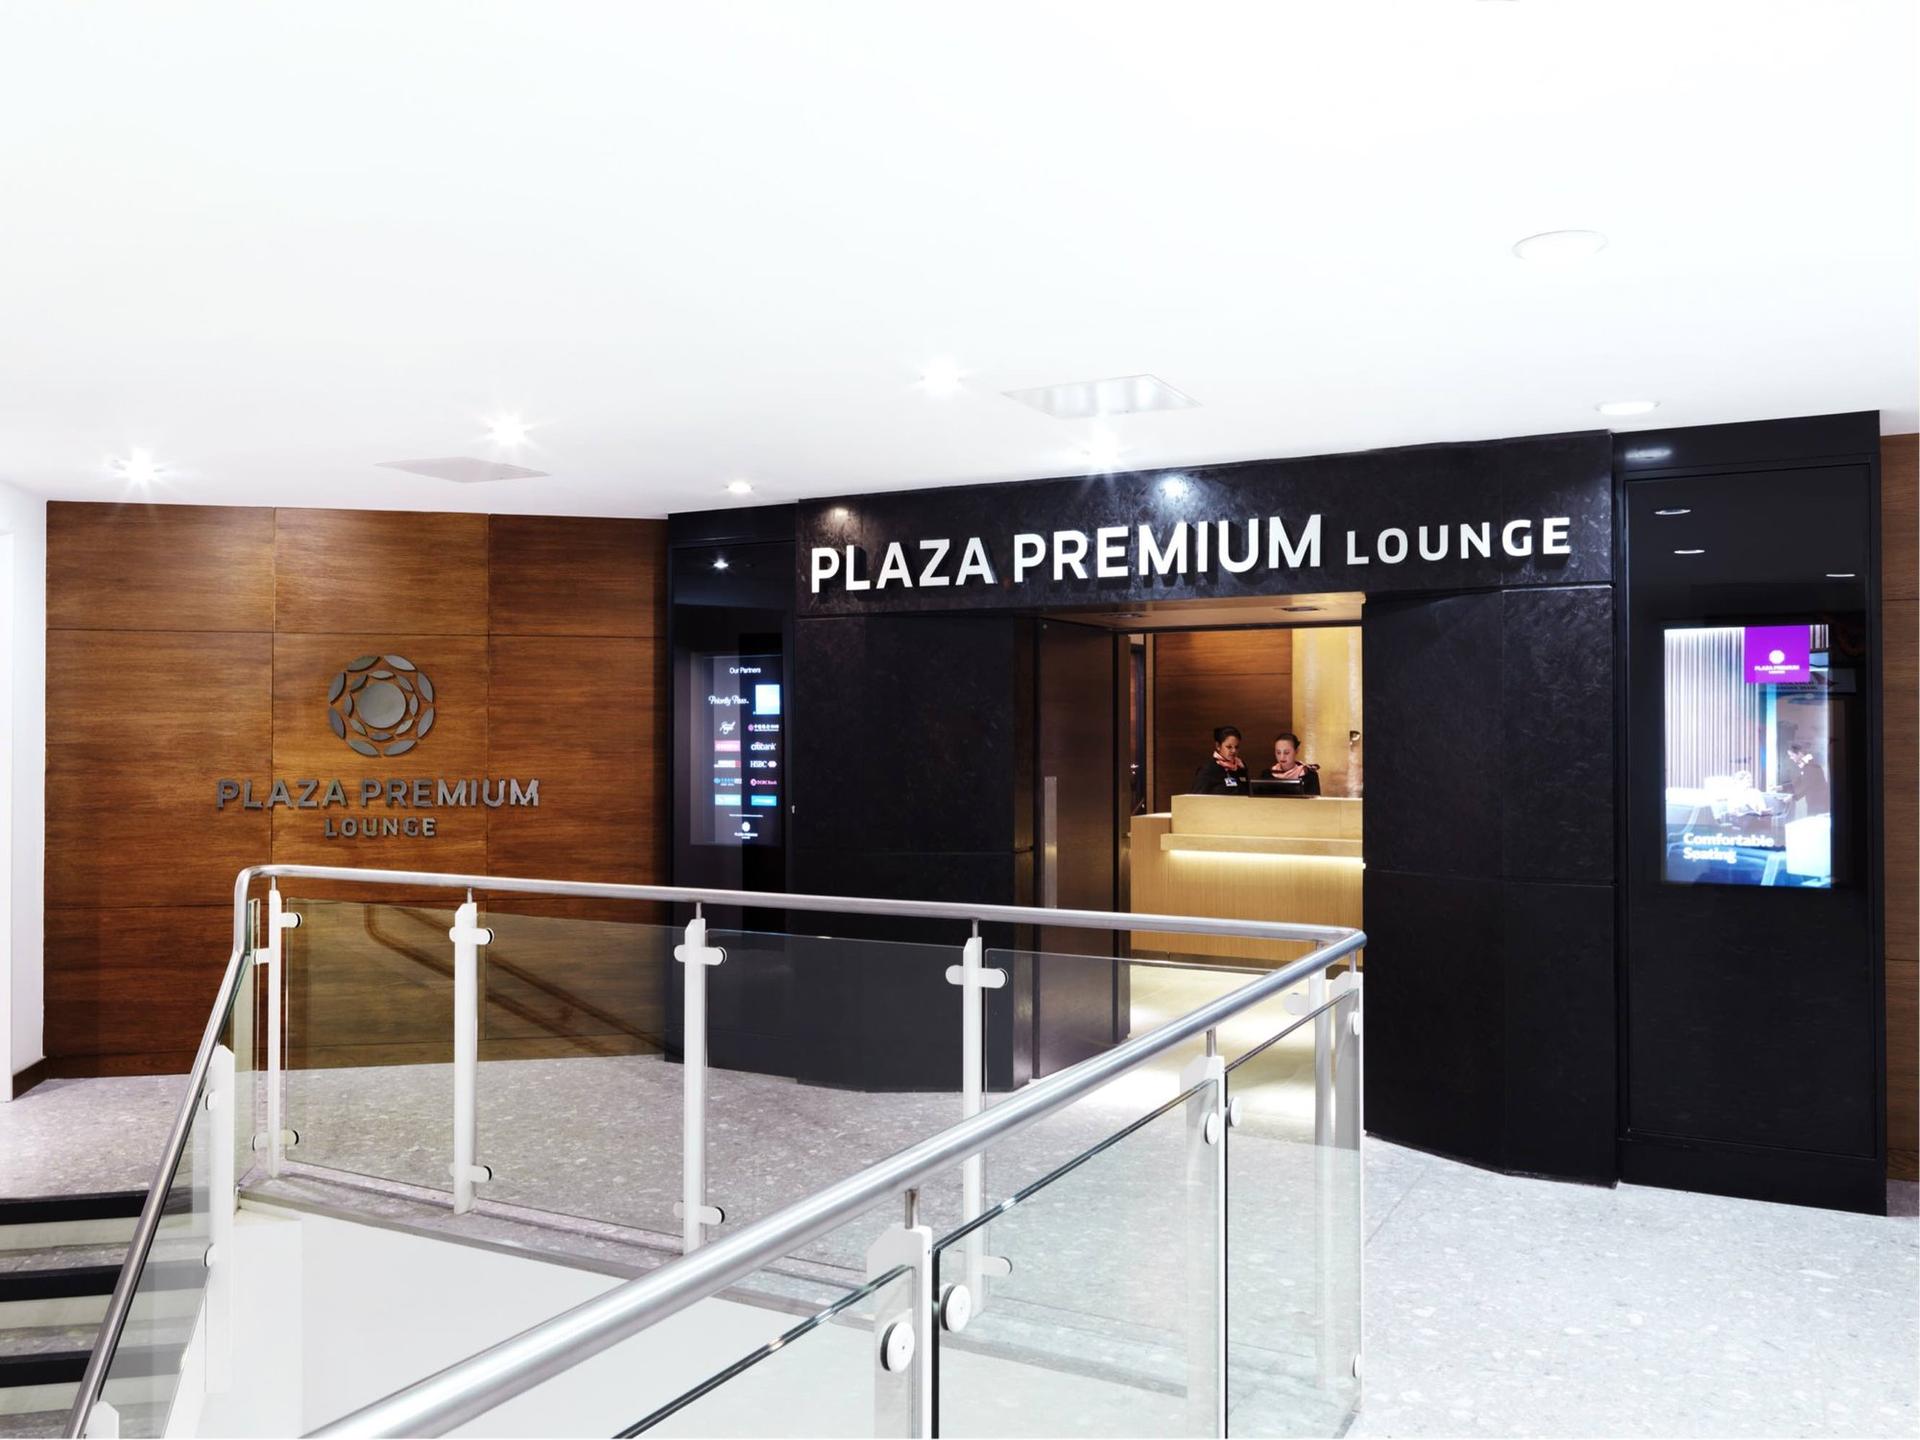 Plaza Premium Lounge image 13 of 22